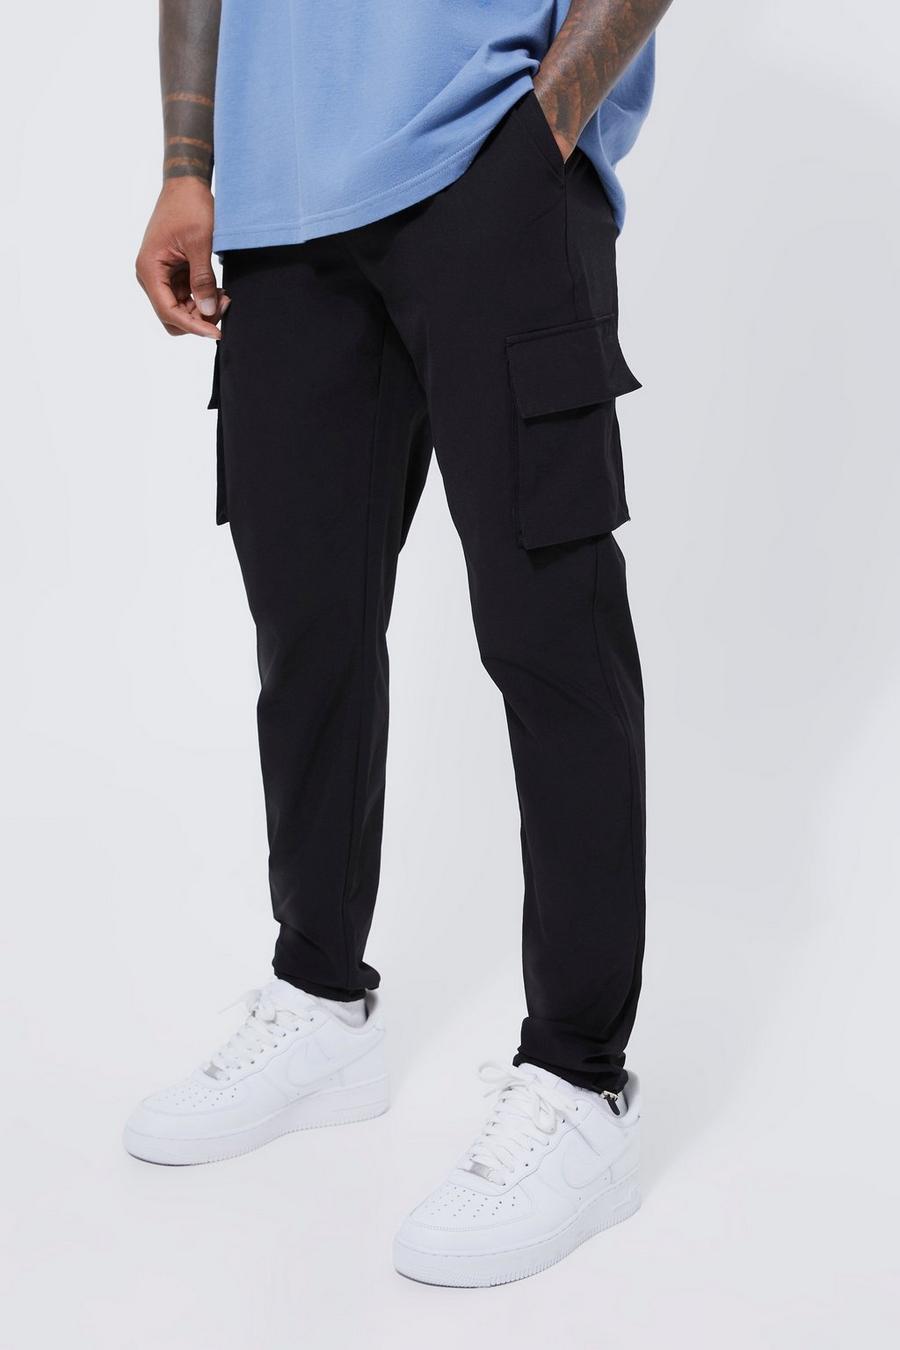 Pantaloni Cargo leggeri in Stretch Skinny Fit elasticizzati, Black